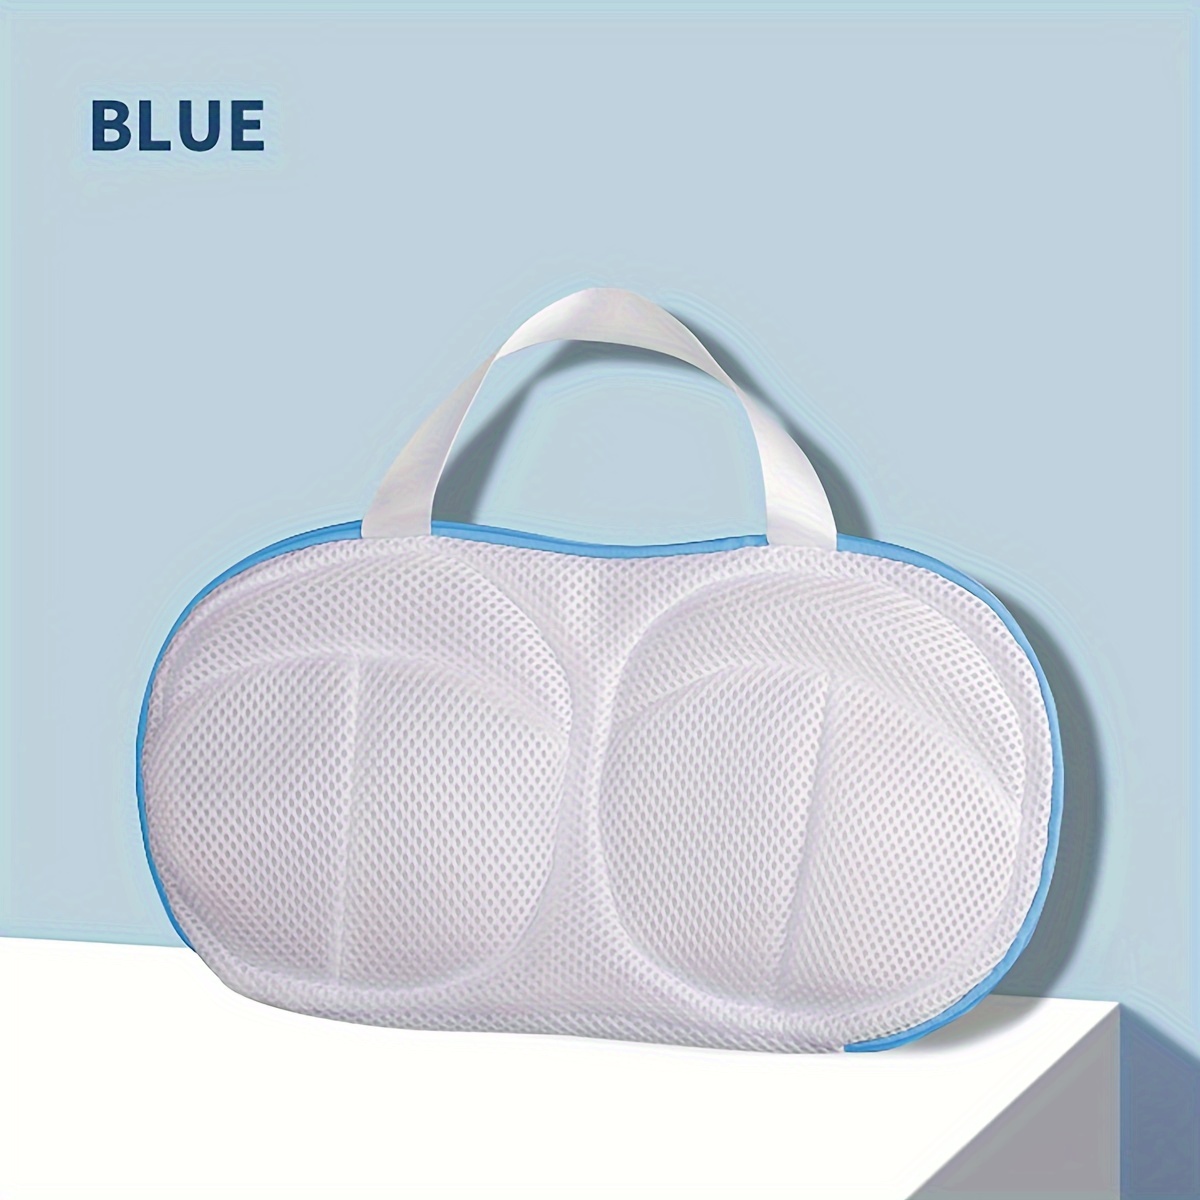 1pc Random Color Lingerie Laundry Bag, Bra Wash Bag, Laundry Wash Bags With  Zipper For Bras